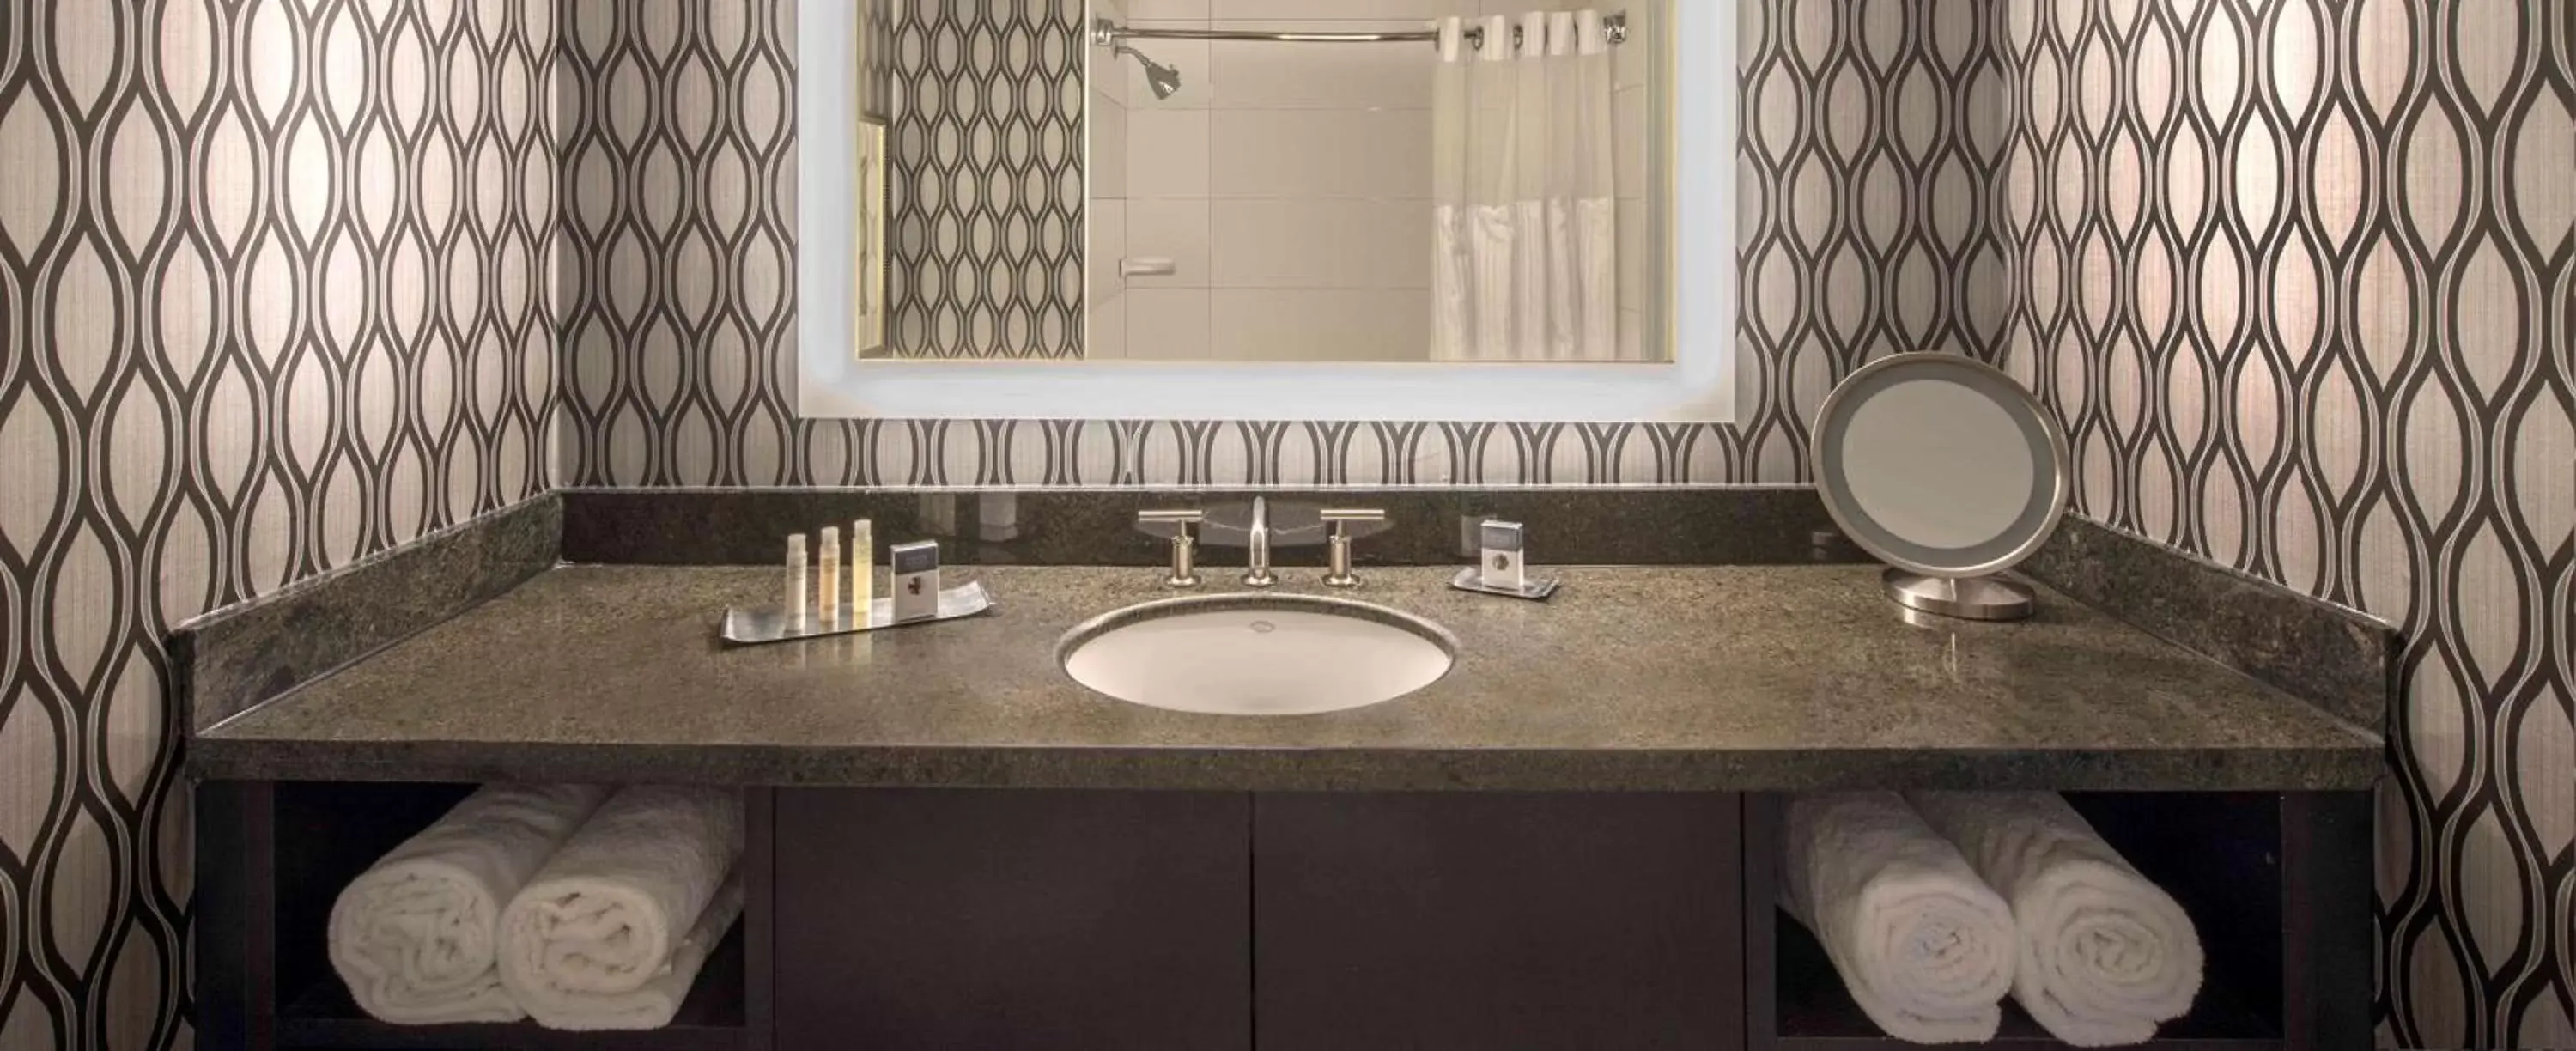 Bathroom in DoubleTree by Hilton Hotel Chicago - Schaumburg